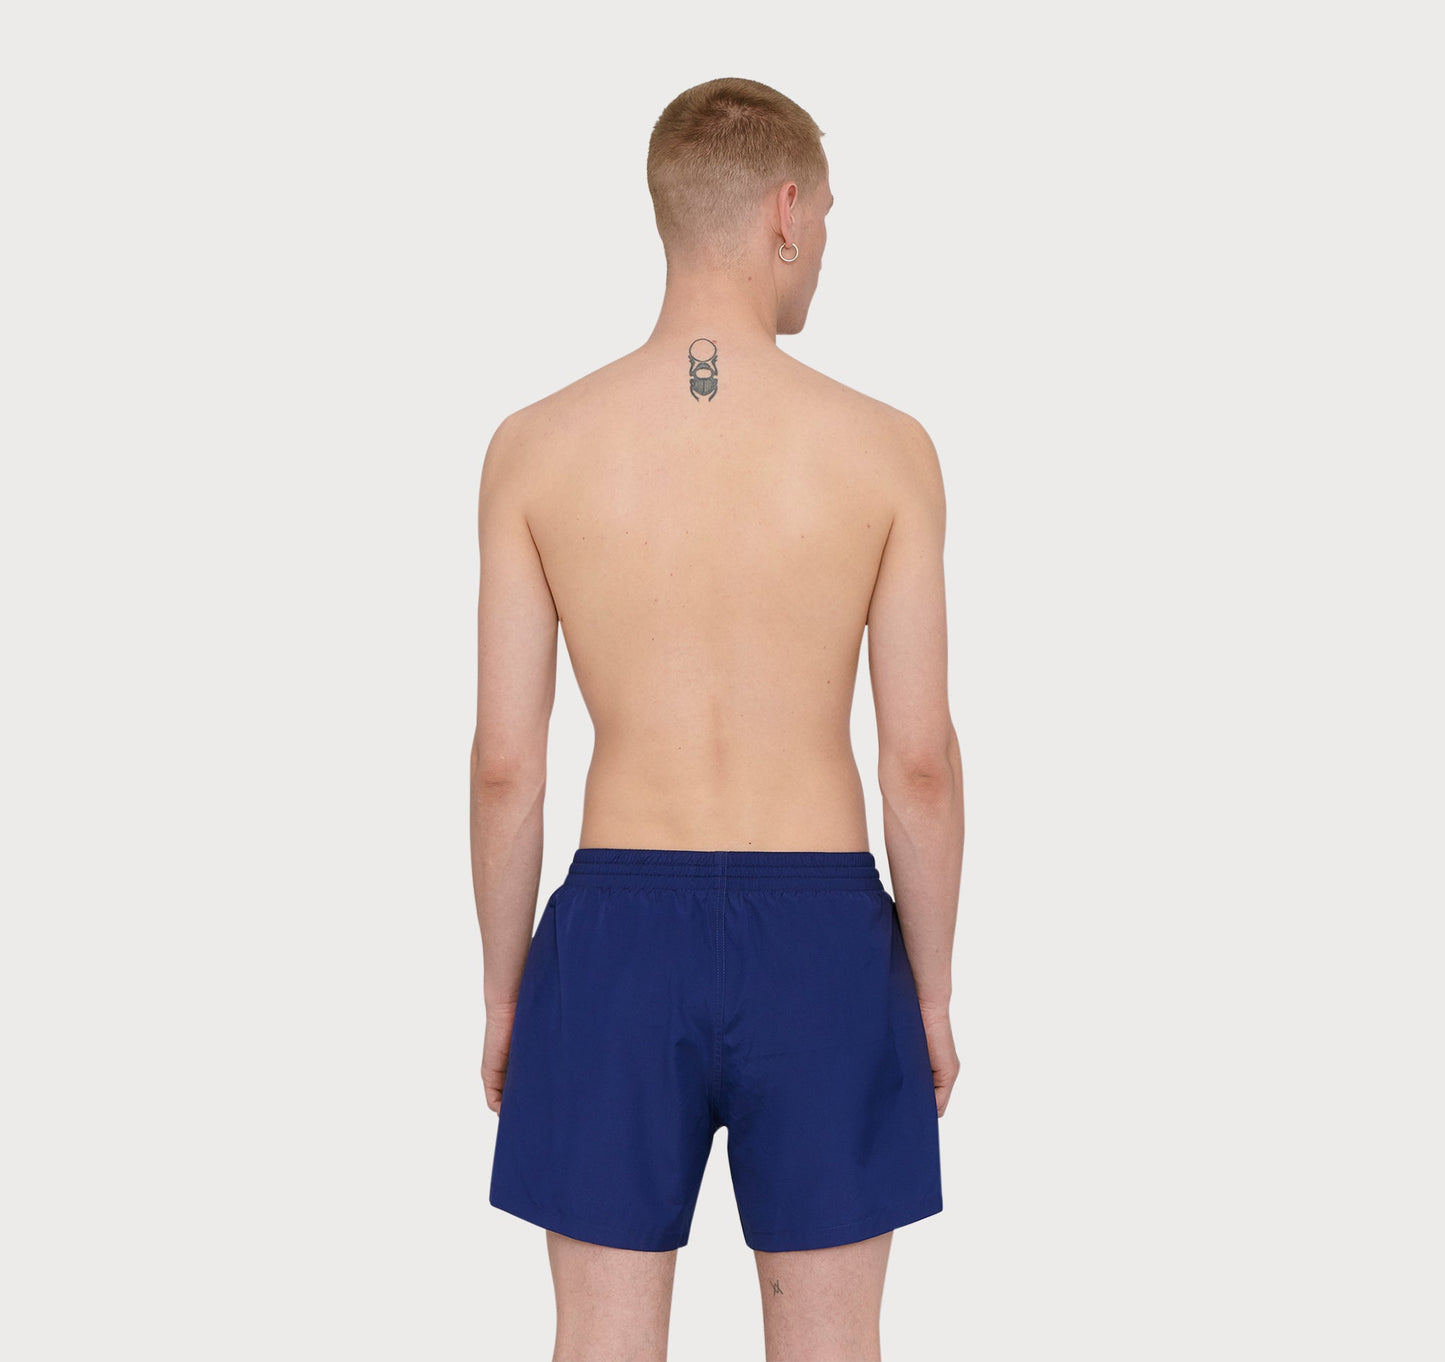 Re-Swim Shorts